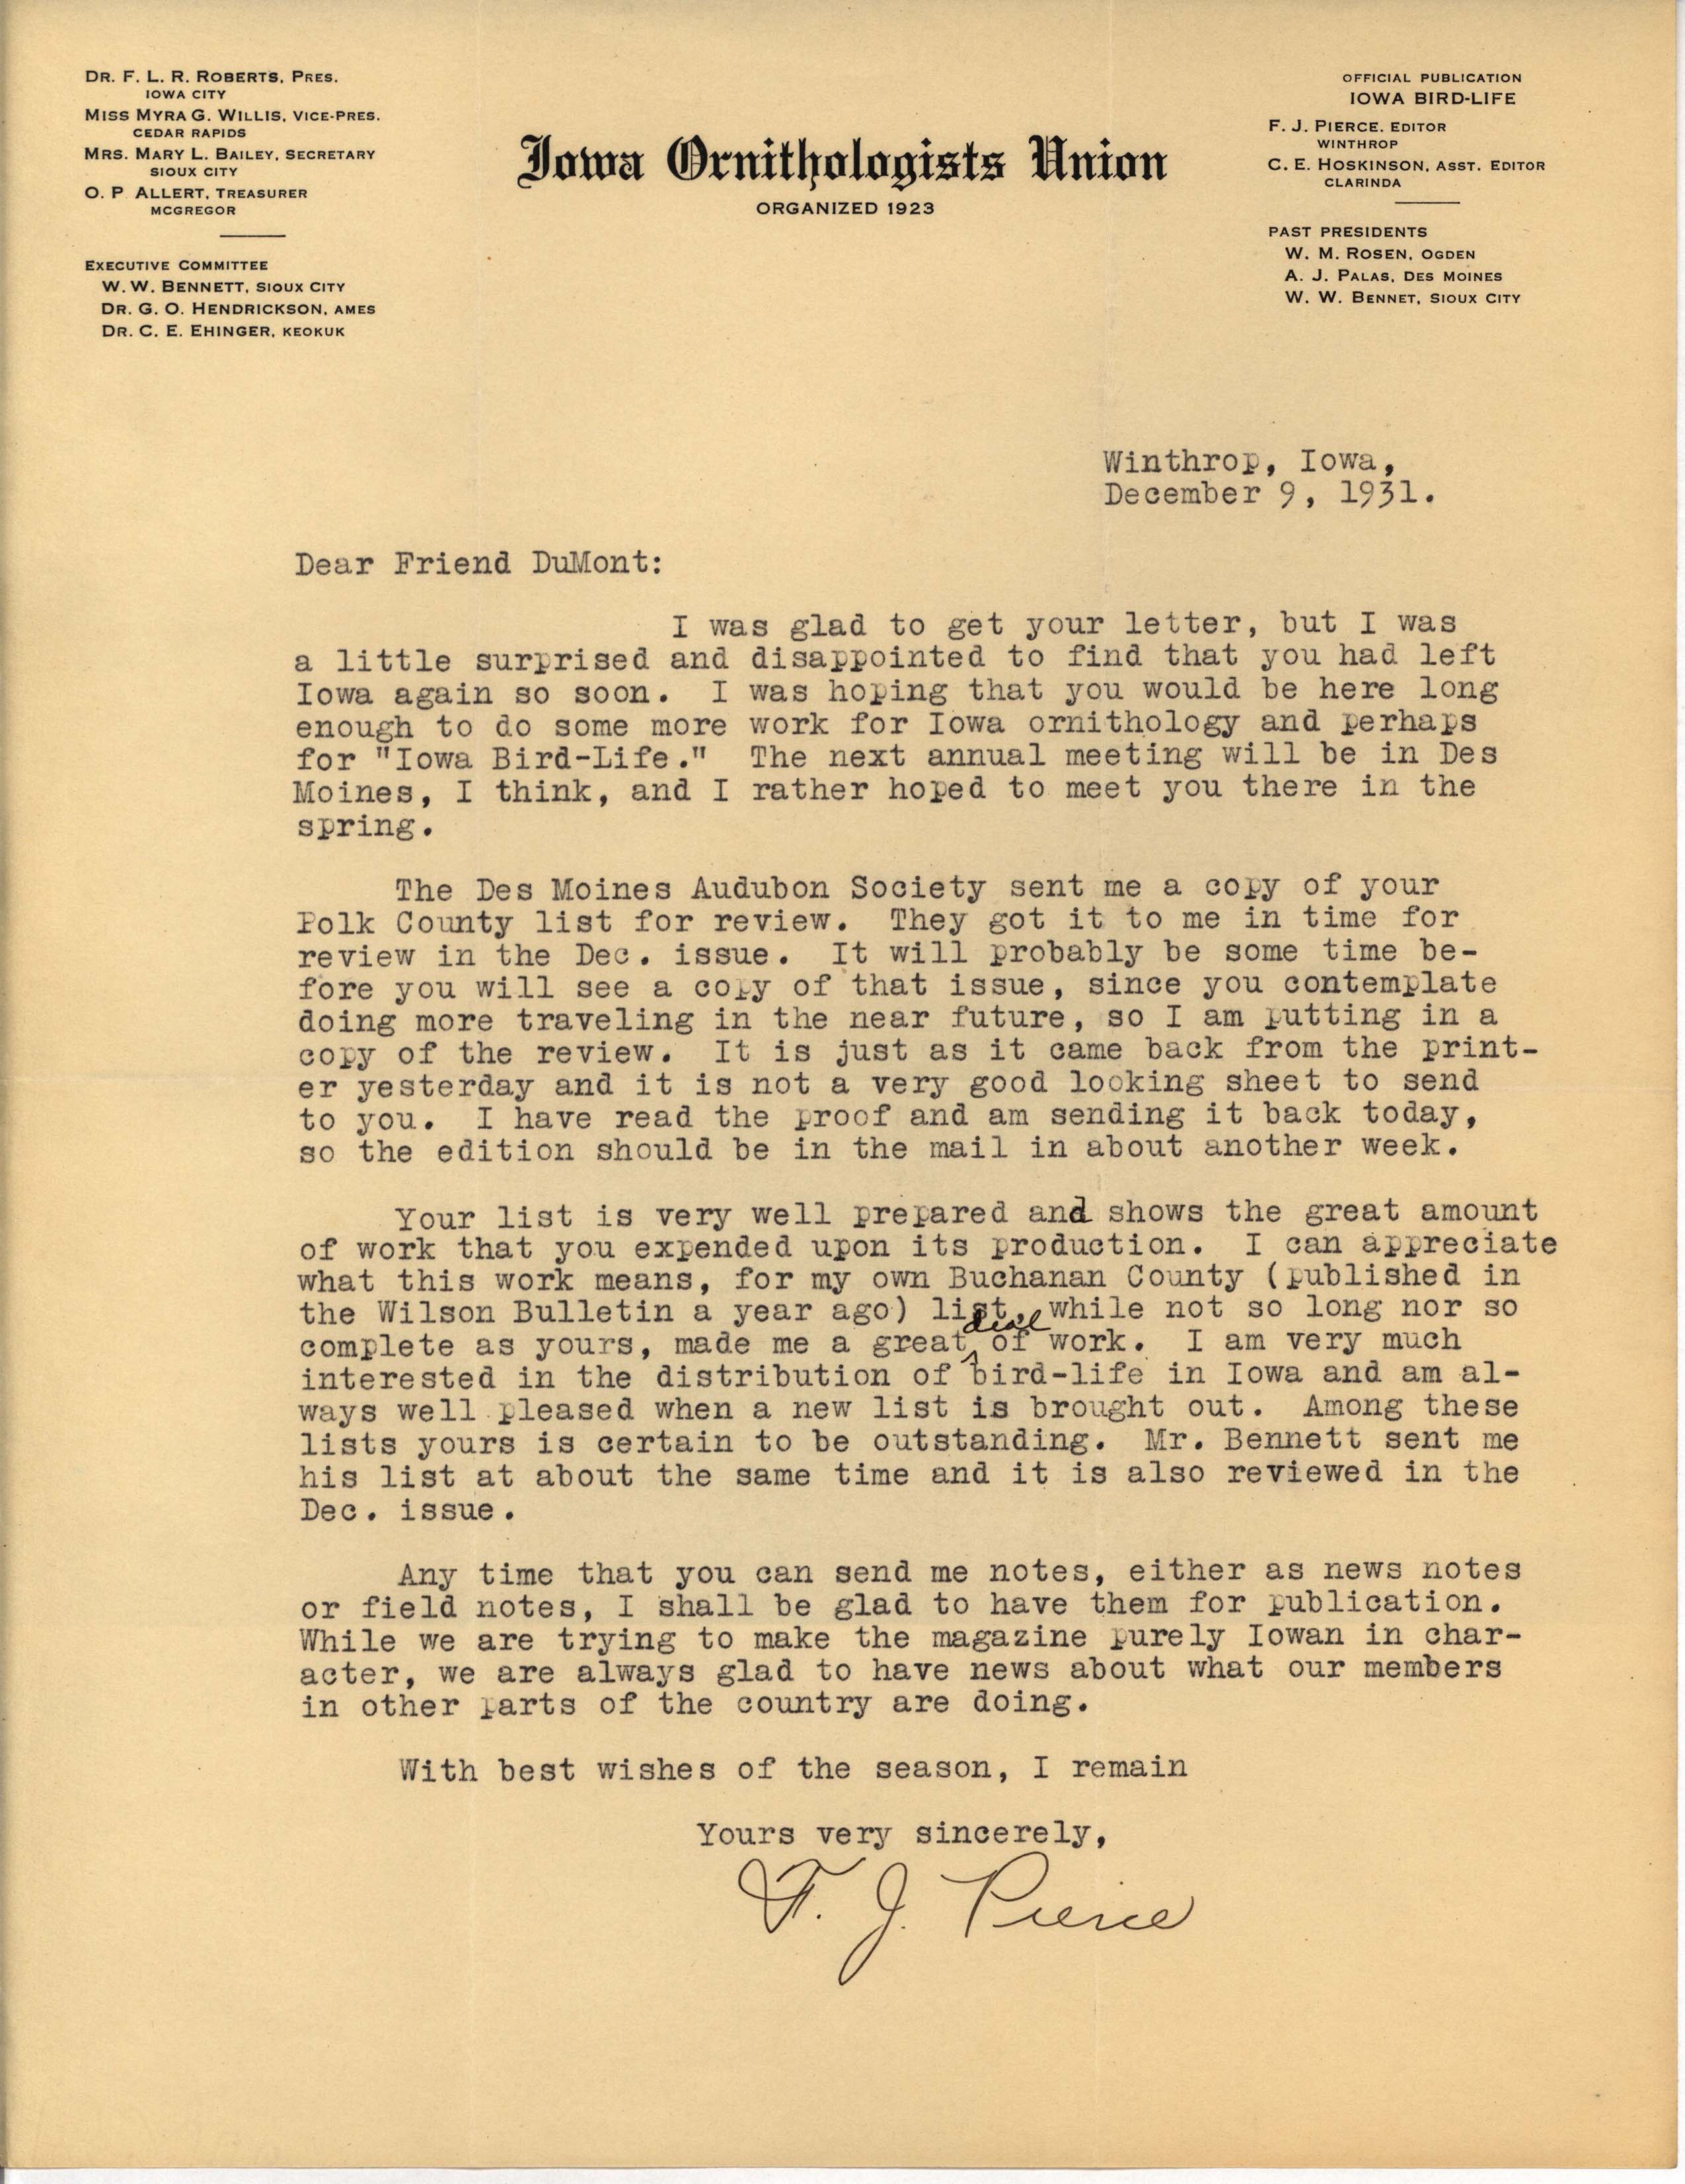 Fred Pierce letter to Philip DuMont regarding book review, December 9, 1931